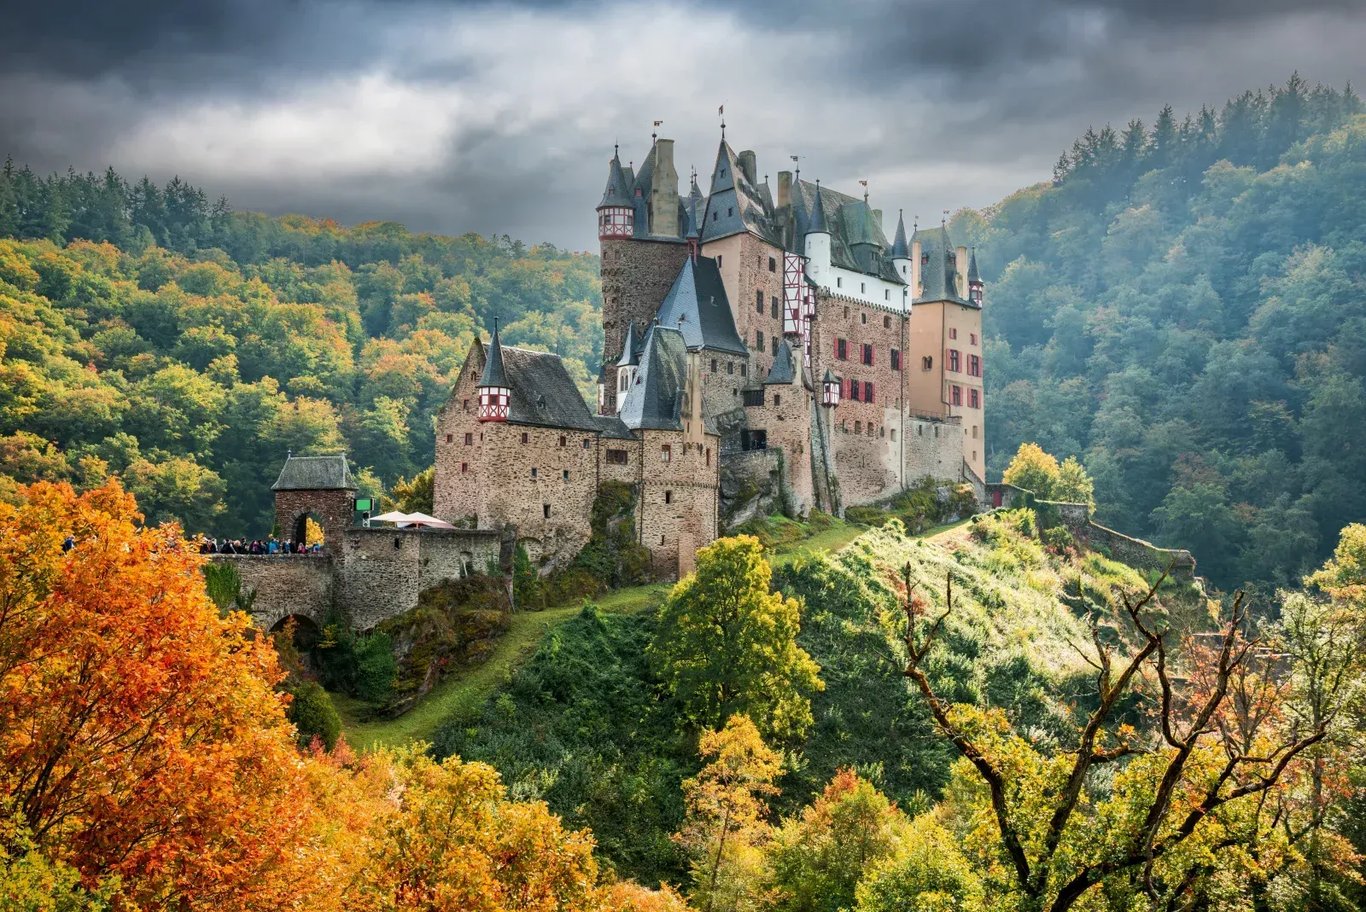 Eltz Castle, Germany - Opening hours, parking, tours ...